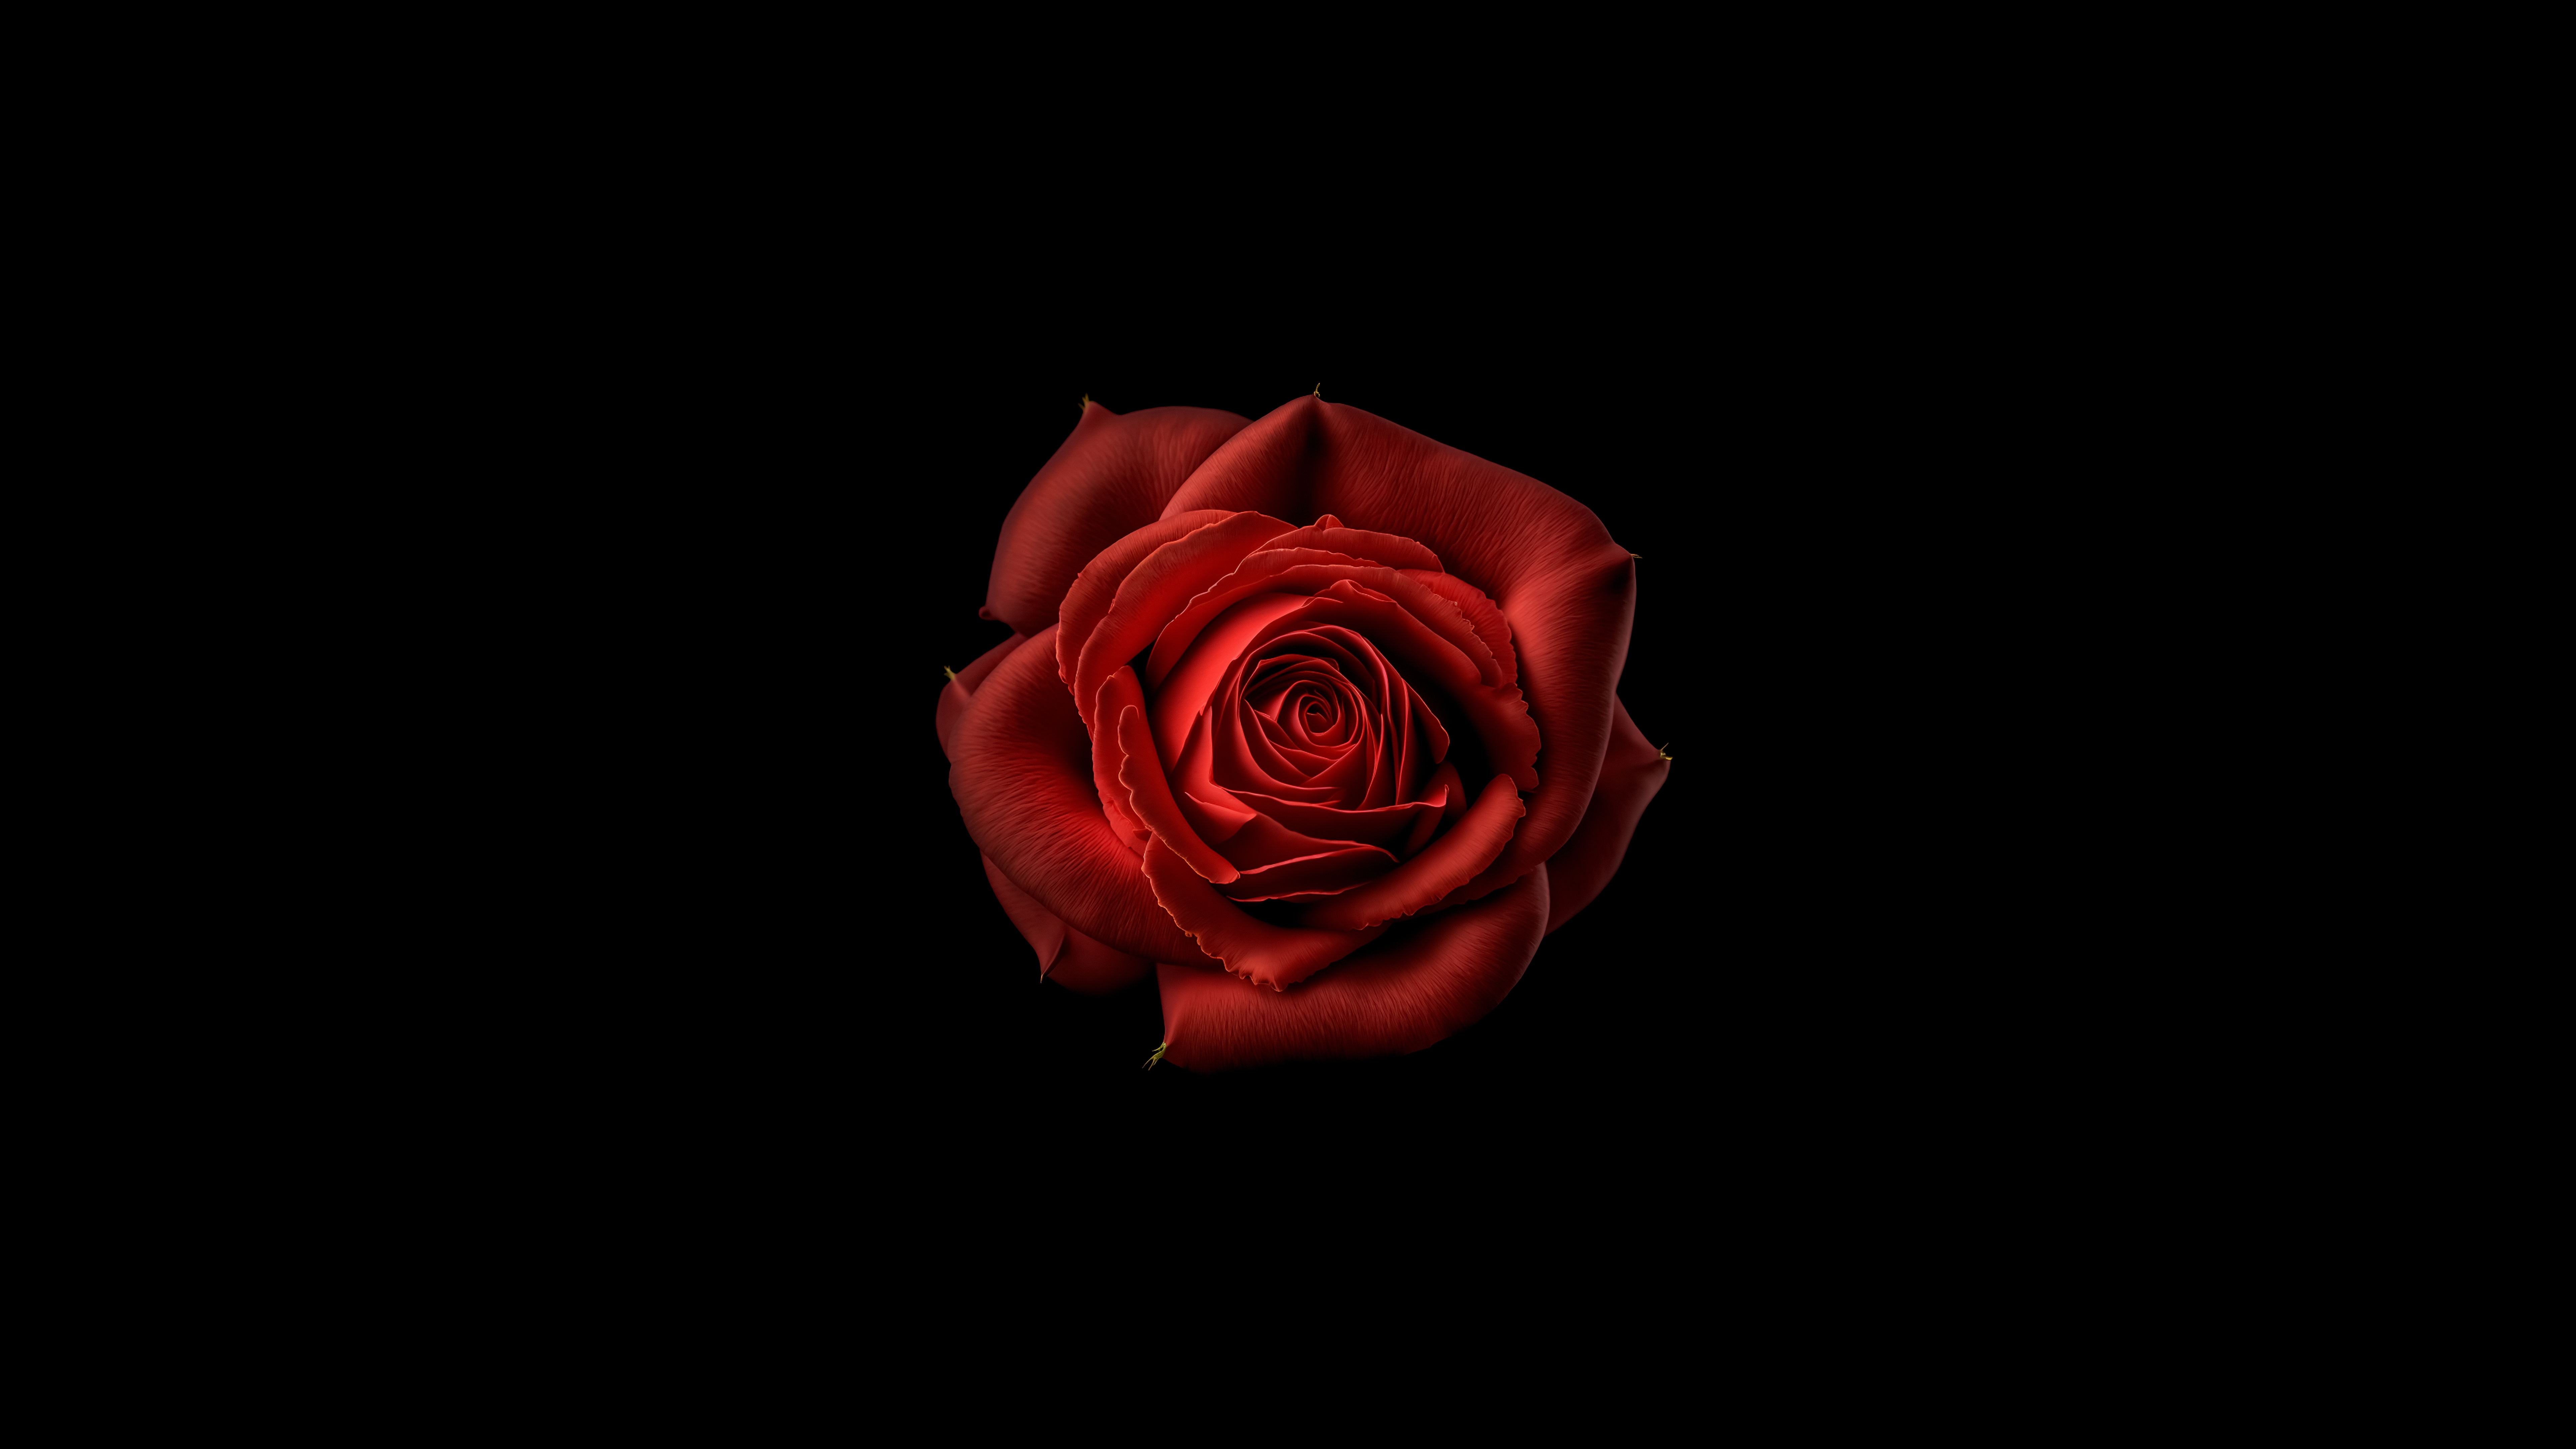 HD wallpaper, Black Background, Red Flower, 8K, Red Rose, 5K